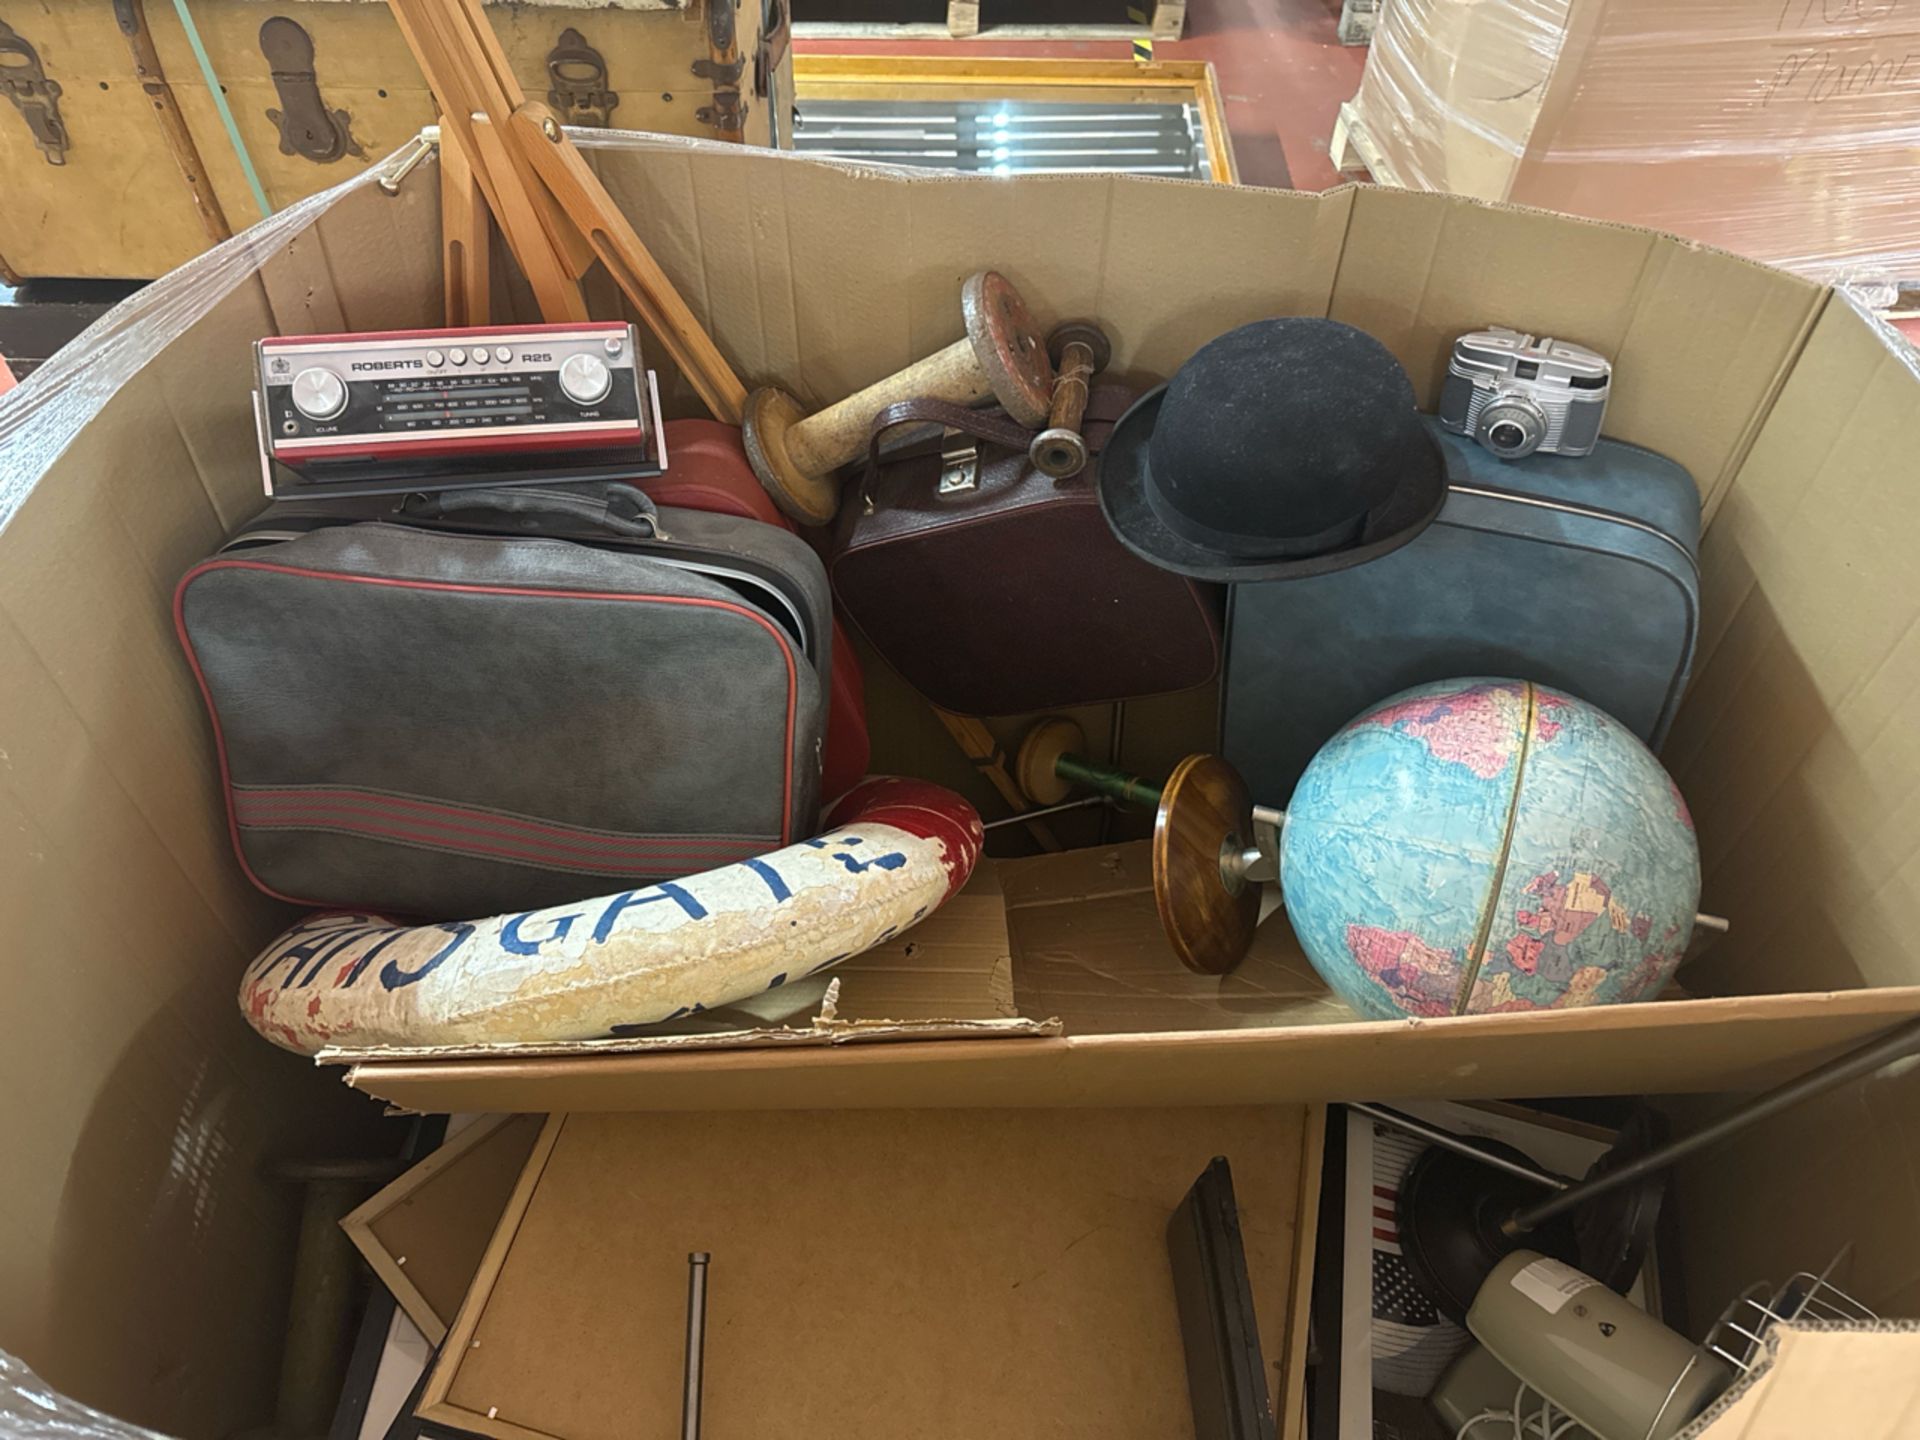 Box of Mixed Display Items - including Vintage Camera, Globe, Camera, Fan, Easel, Roberts Radio